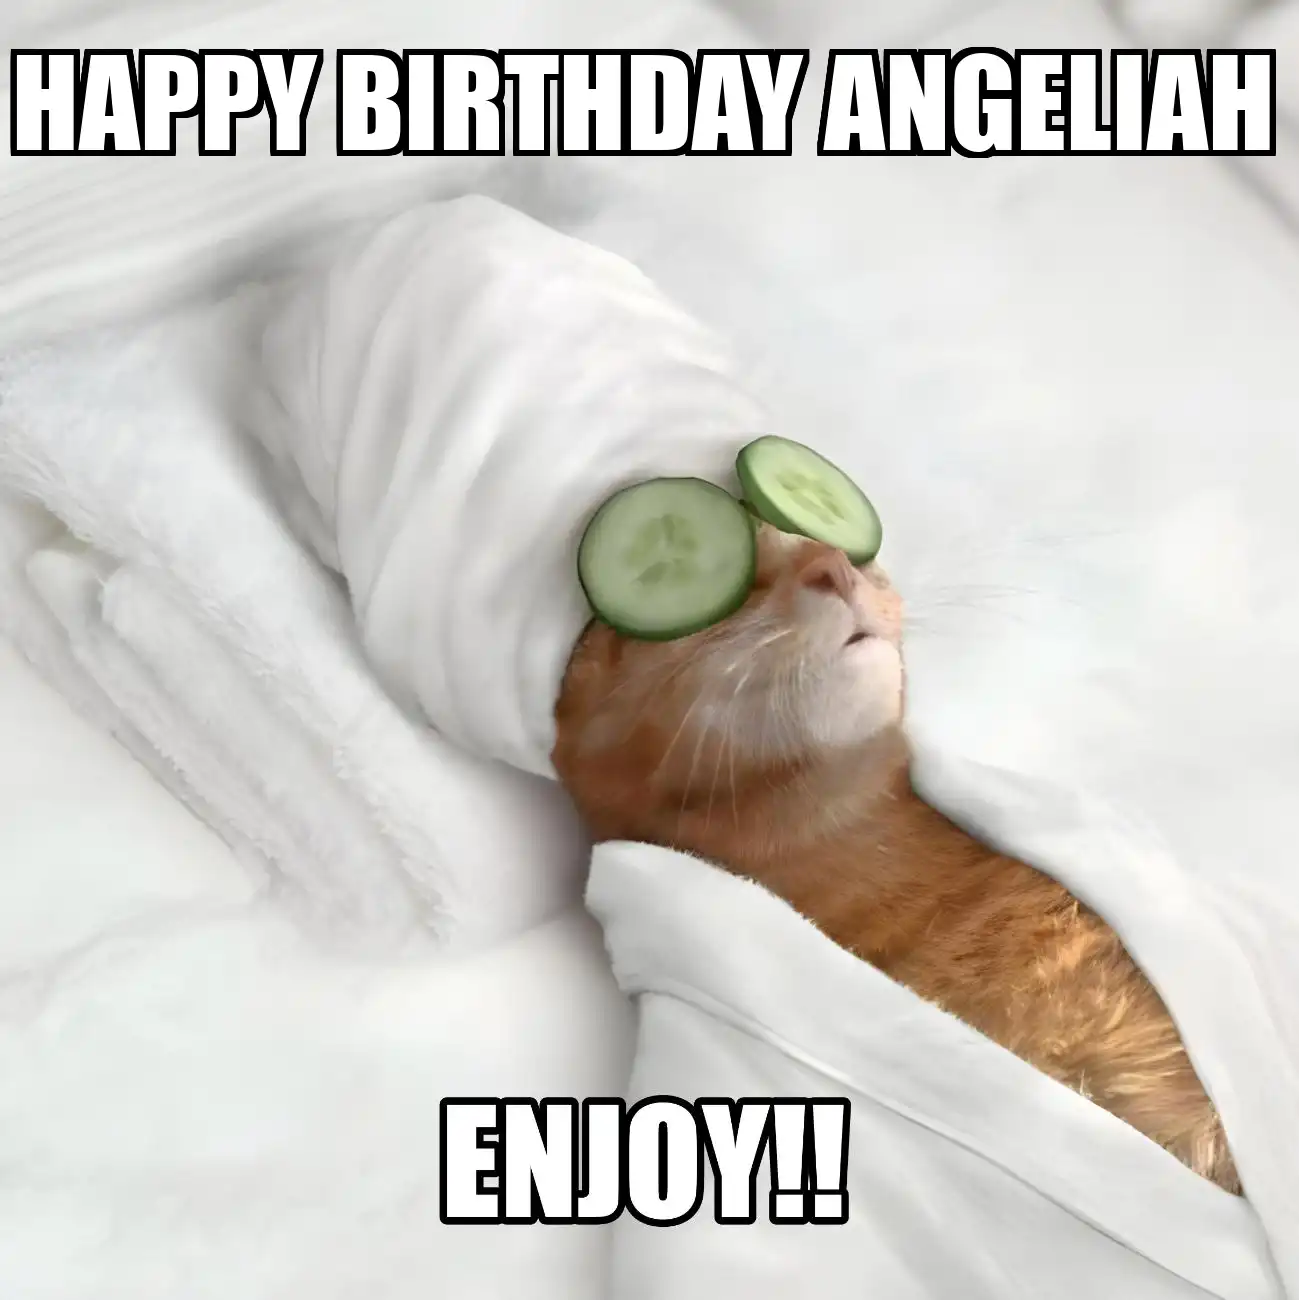 Happy Birthday Angeliah Enjoy Cat Meme